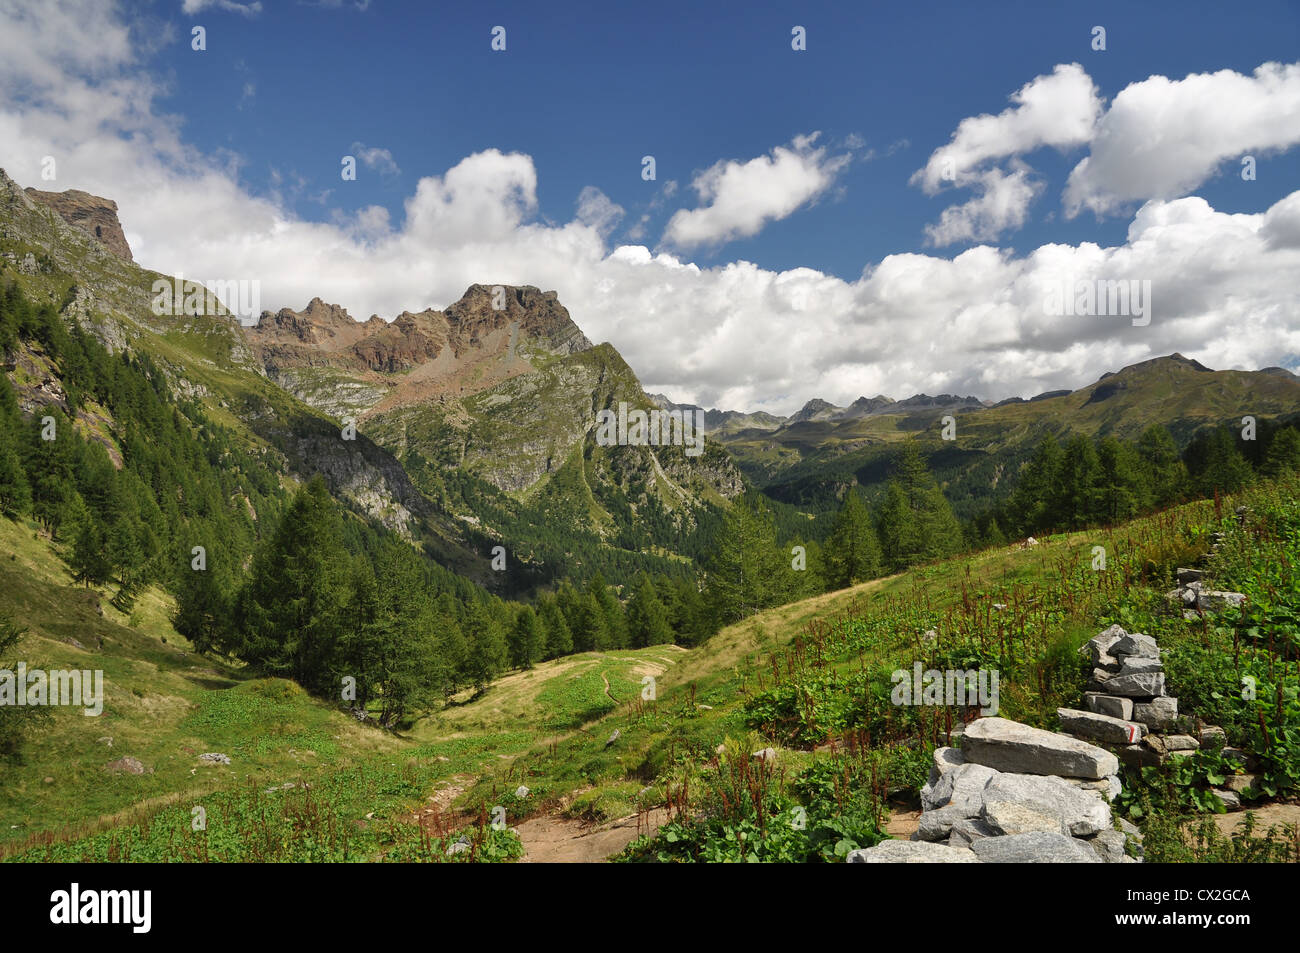 High Mountain landscape in the Alps, Alpe Devero, Italy Stock Photo